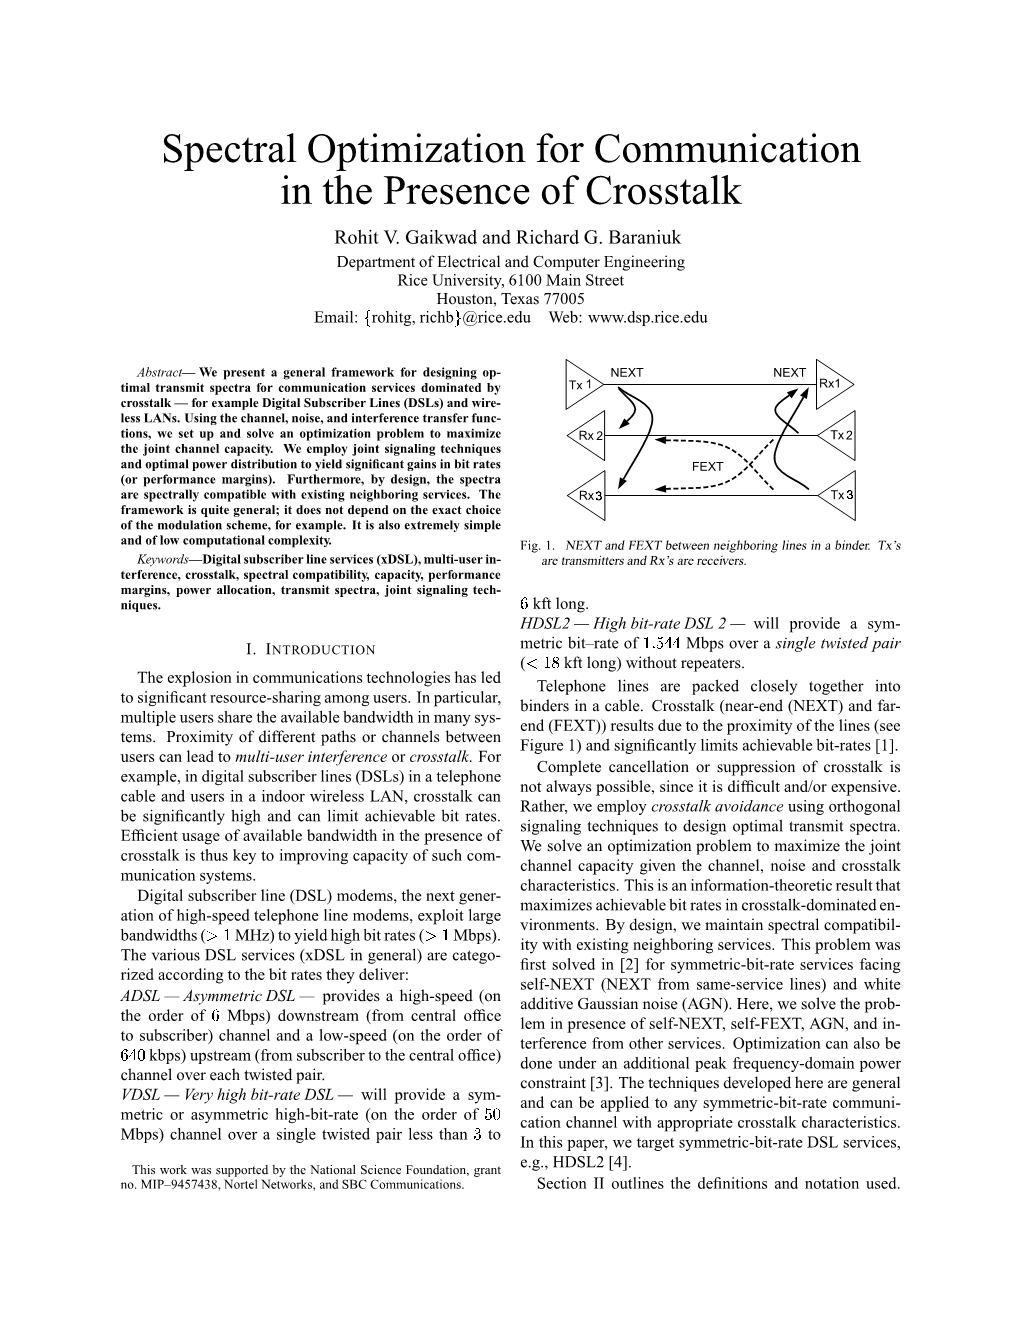 Spectral Optimization for Communication in the Presence of Crosstalk Rohit V